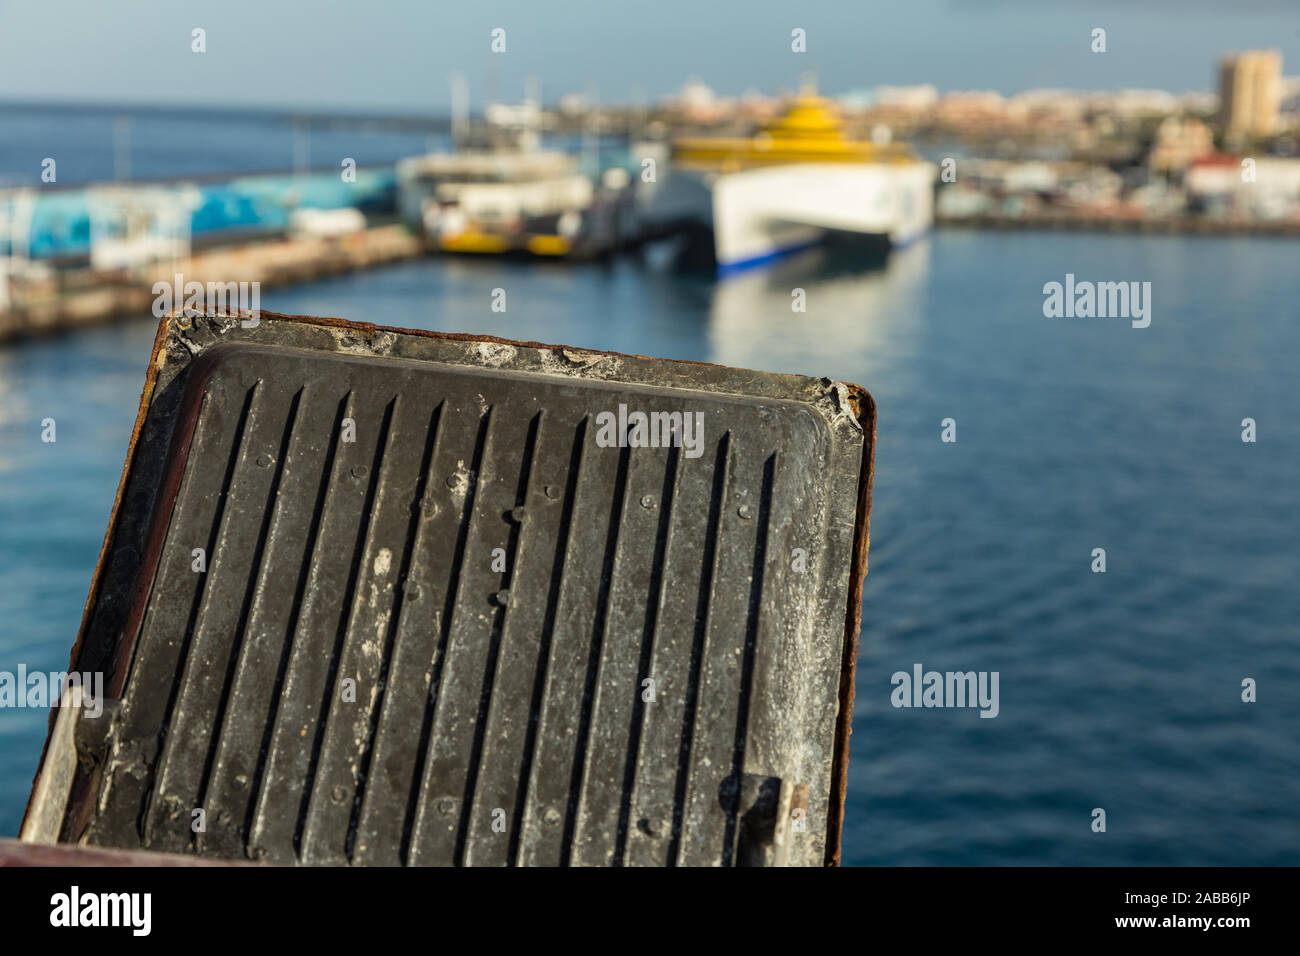 Boat searchlight -Fotos und -Bildmaterial in hoher Auflösung – Alamy